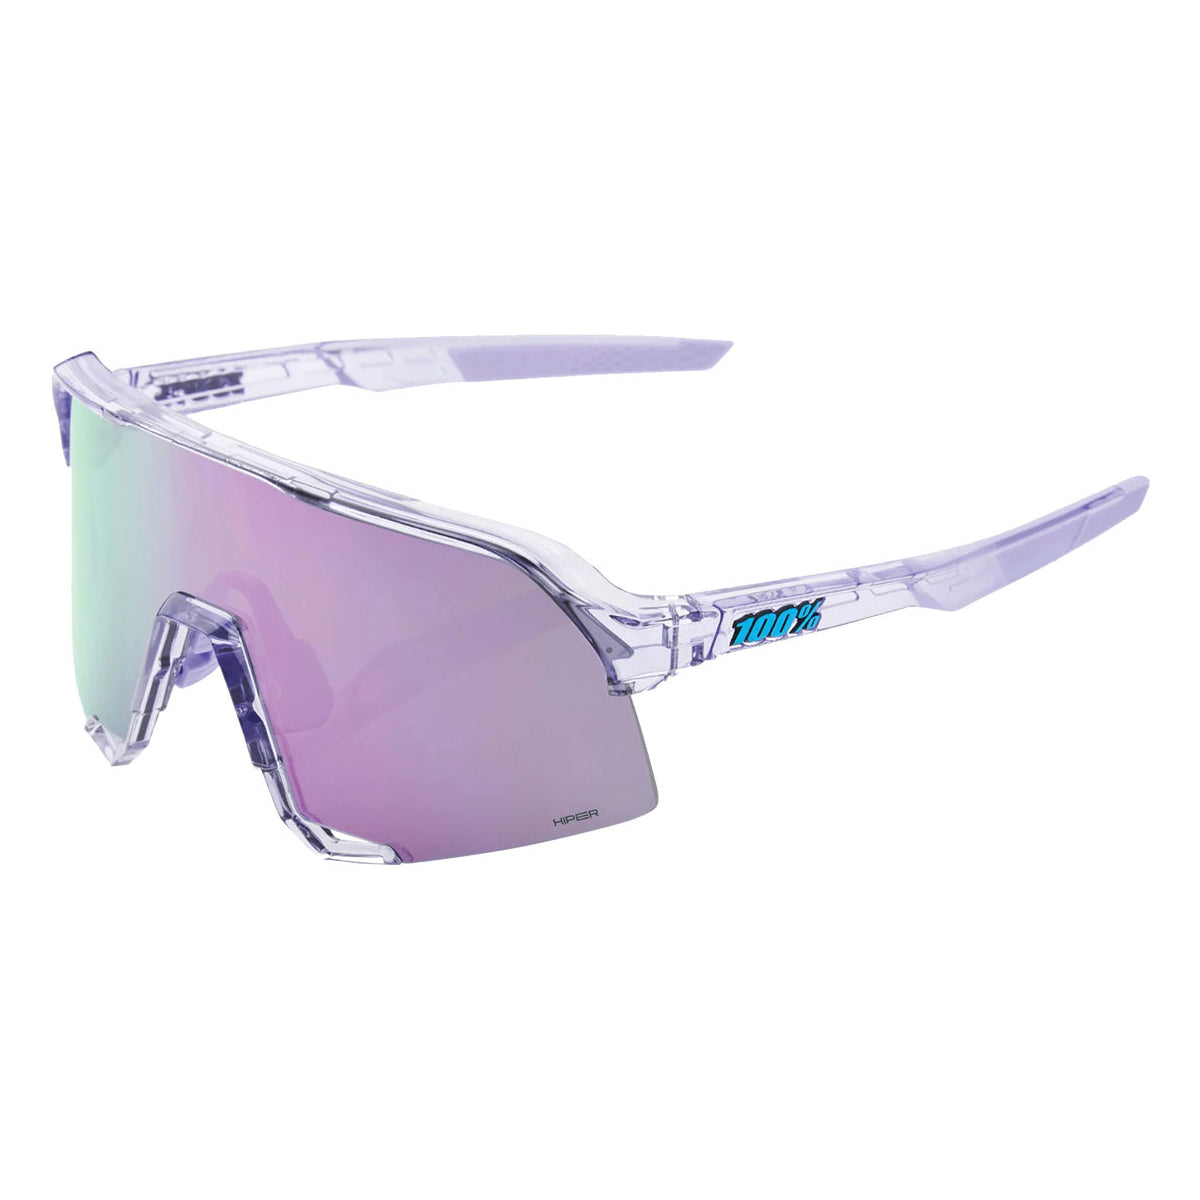 100 Percent S3 Sunglasses - Polished Translucent Lavender - HiPER Lavender Mirror Lens